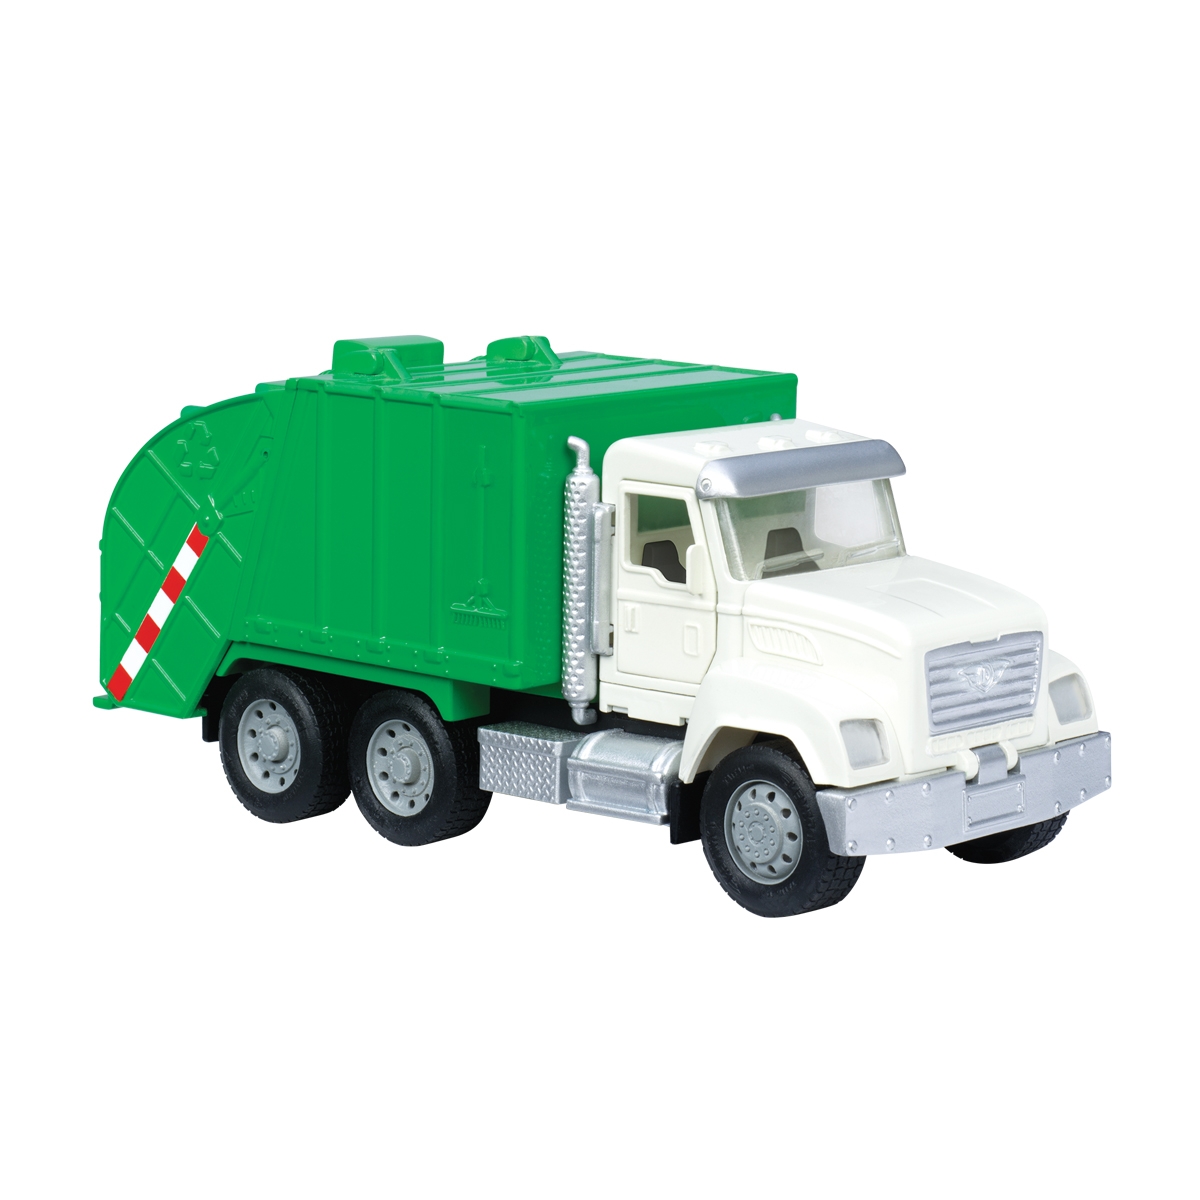 battat driven recycling truck